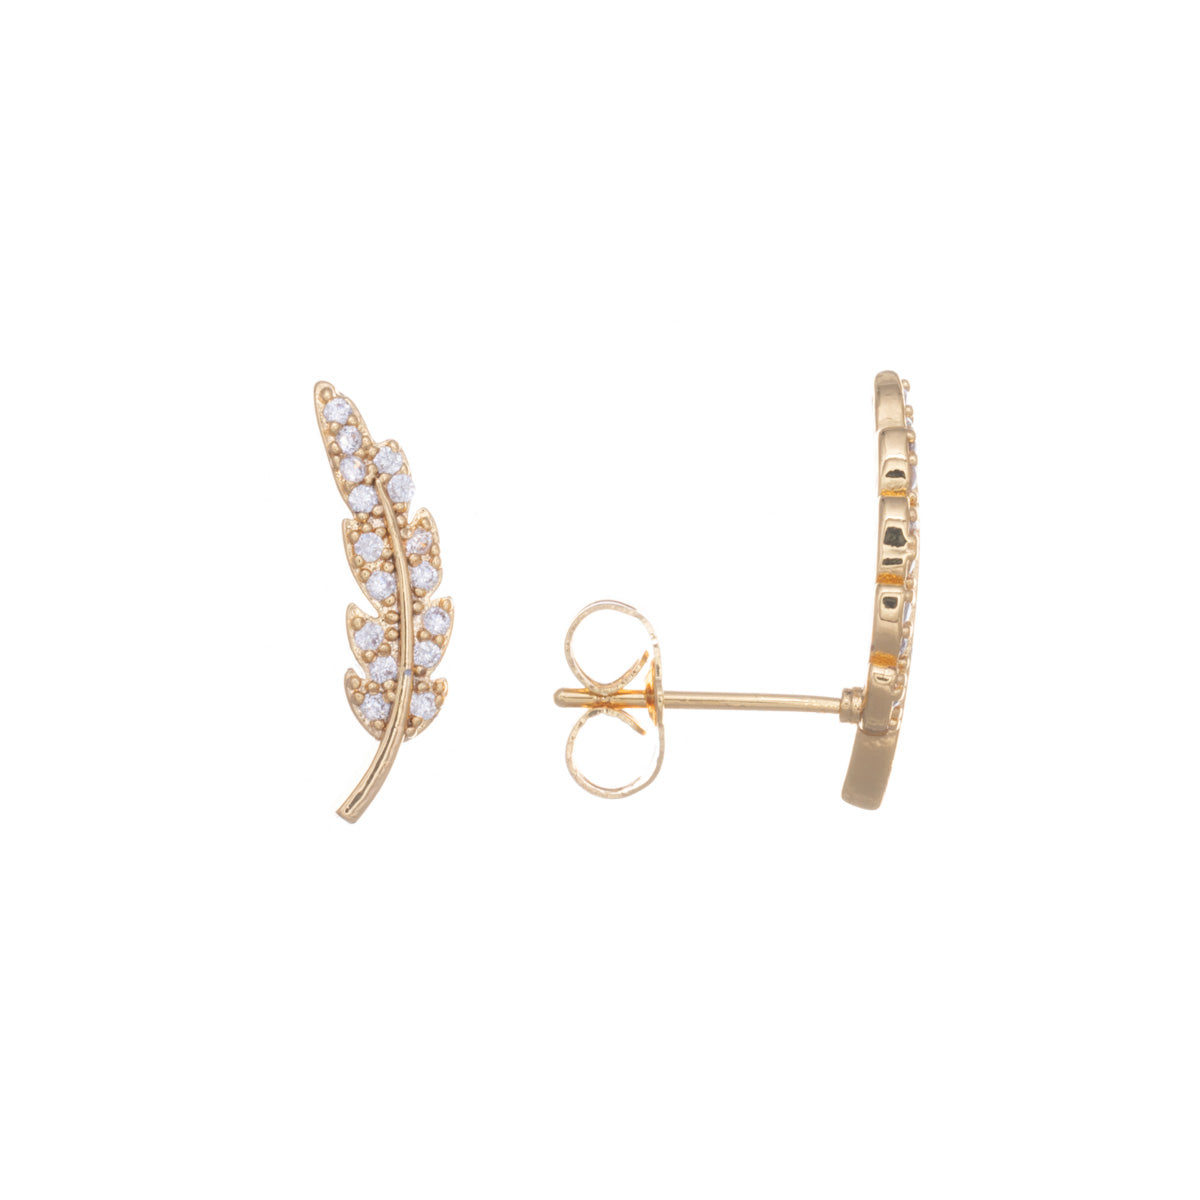 Feather earrings with zirconia stones